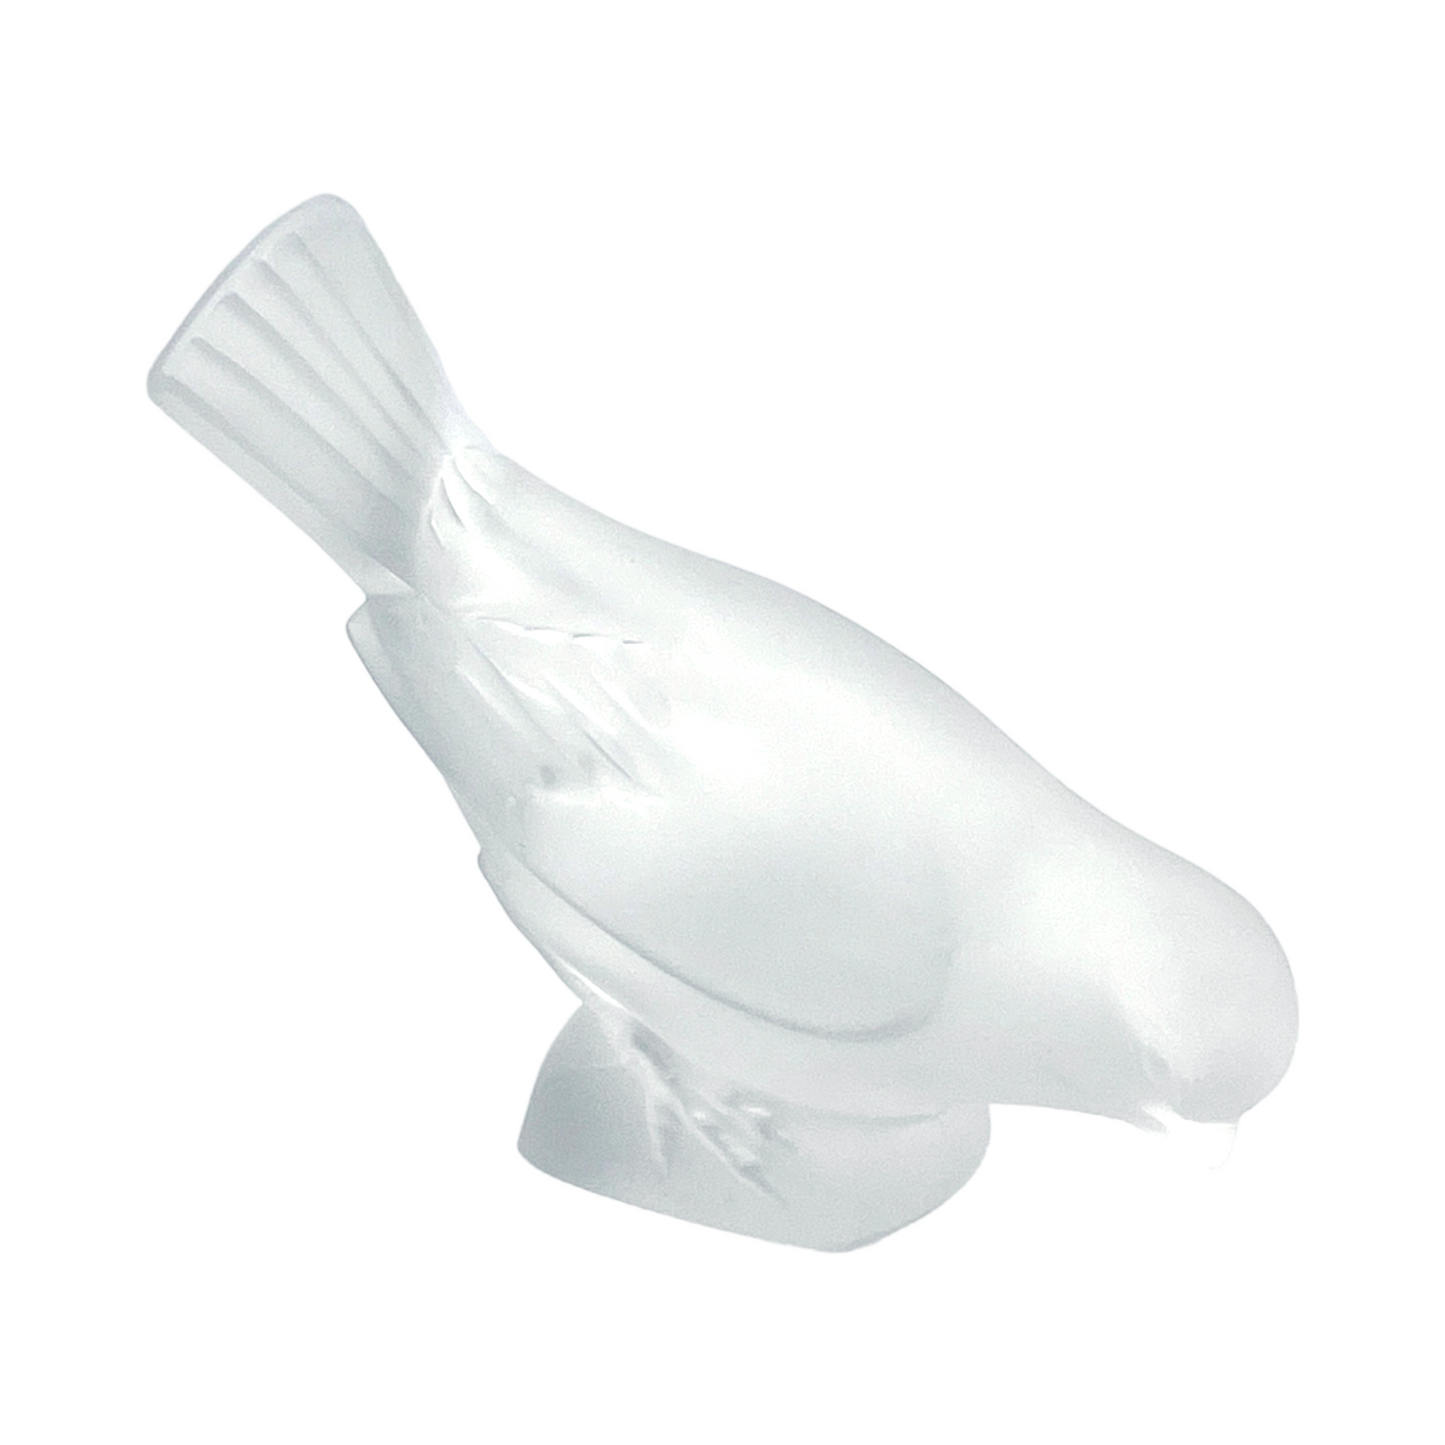 Lalique Crystal - Sparrow Head Down Figurine - Signed Lalique - 4"